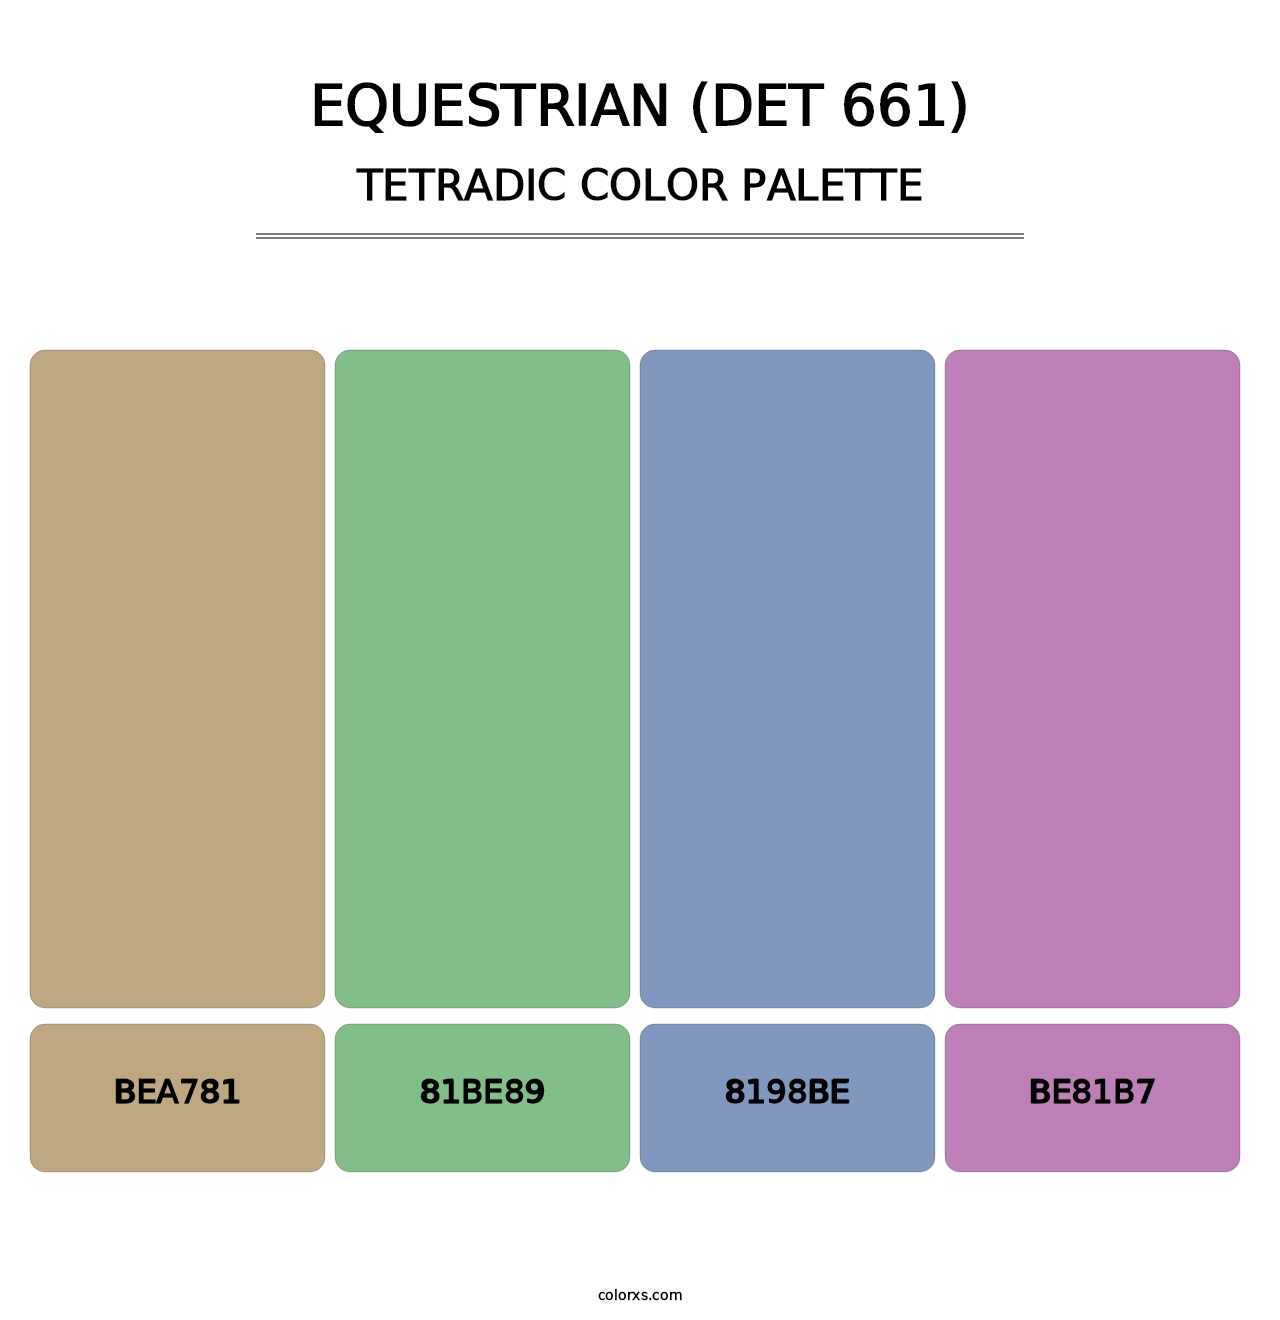 Equestrian (DET 661) - Tetradic Color Palette